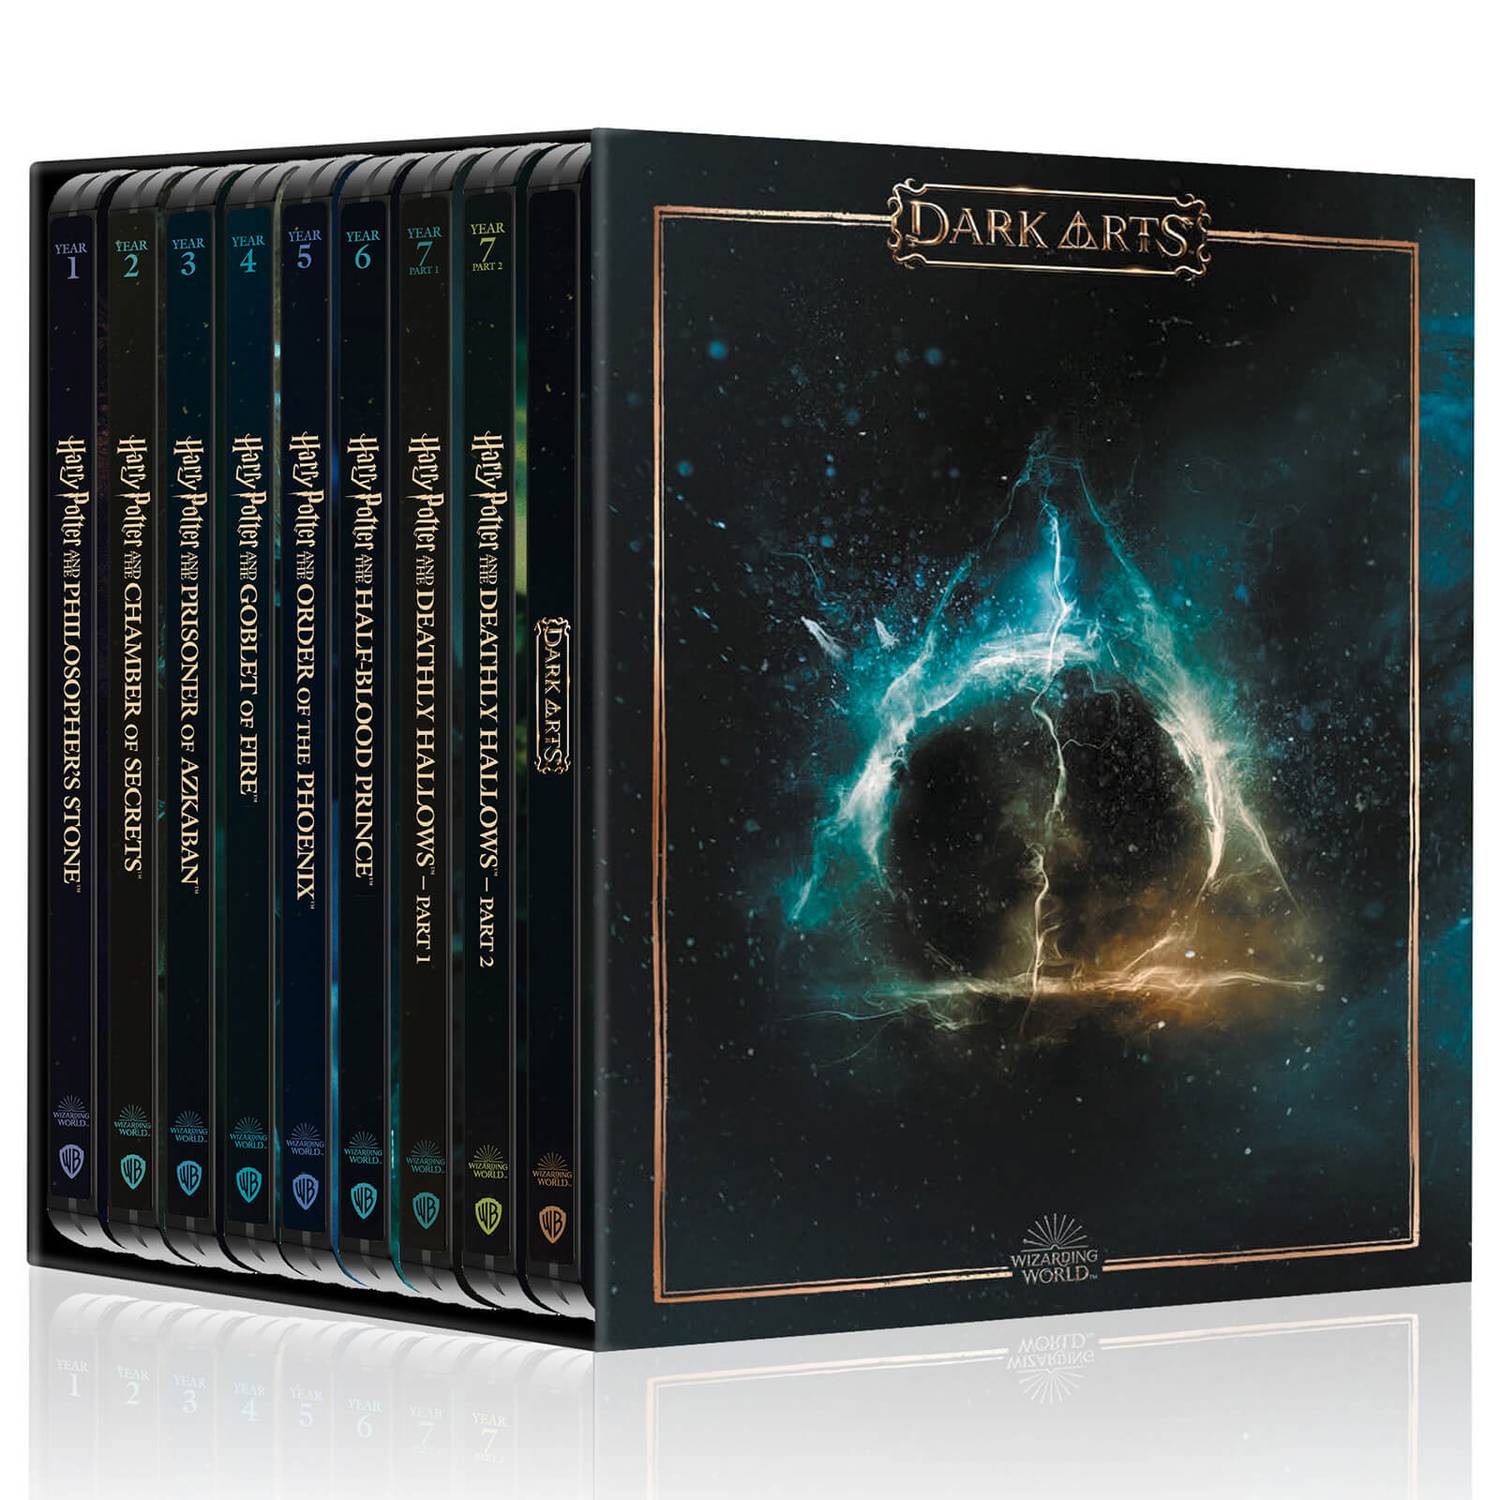 Гарри Поттер: Полная Коллекция (англ. яз.) (4K UHD Blu-ray) Dark Arts Edition Steelbook Collection